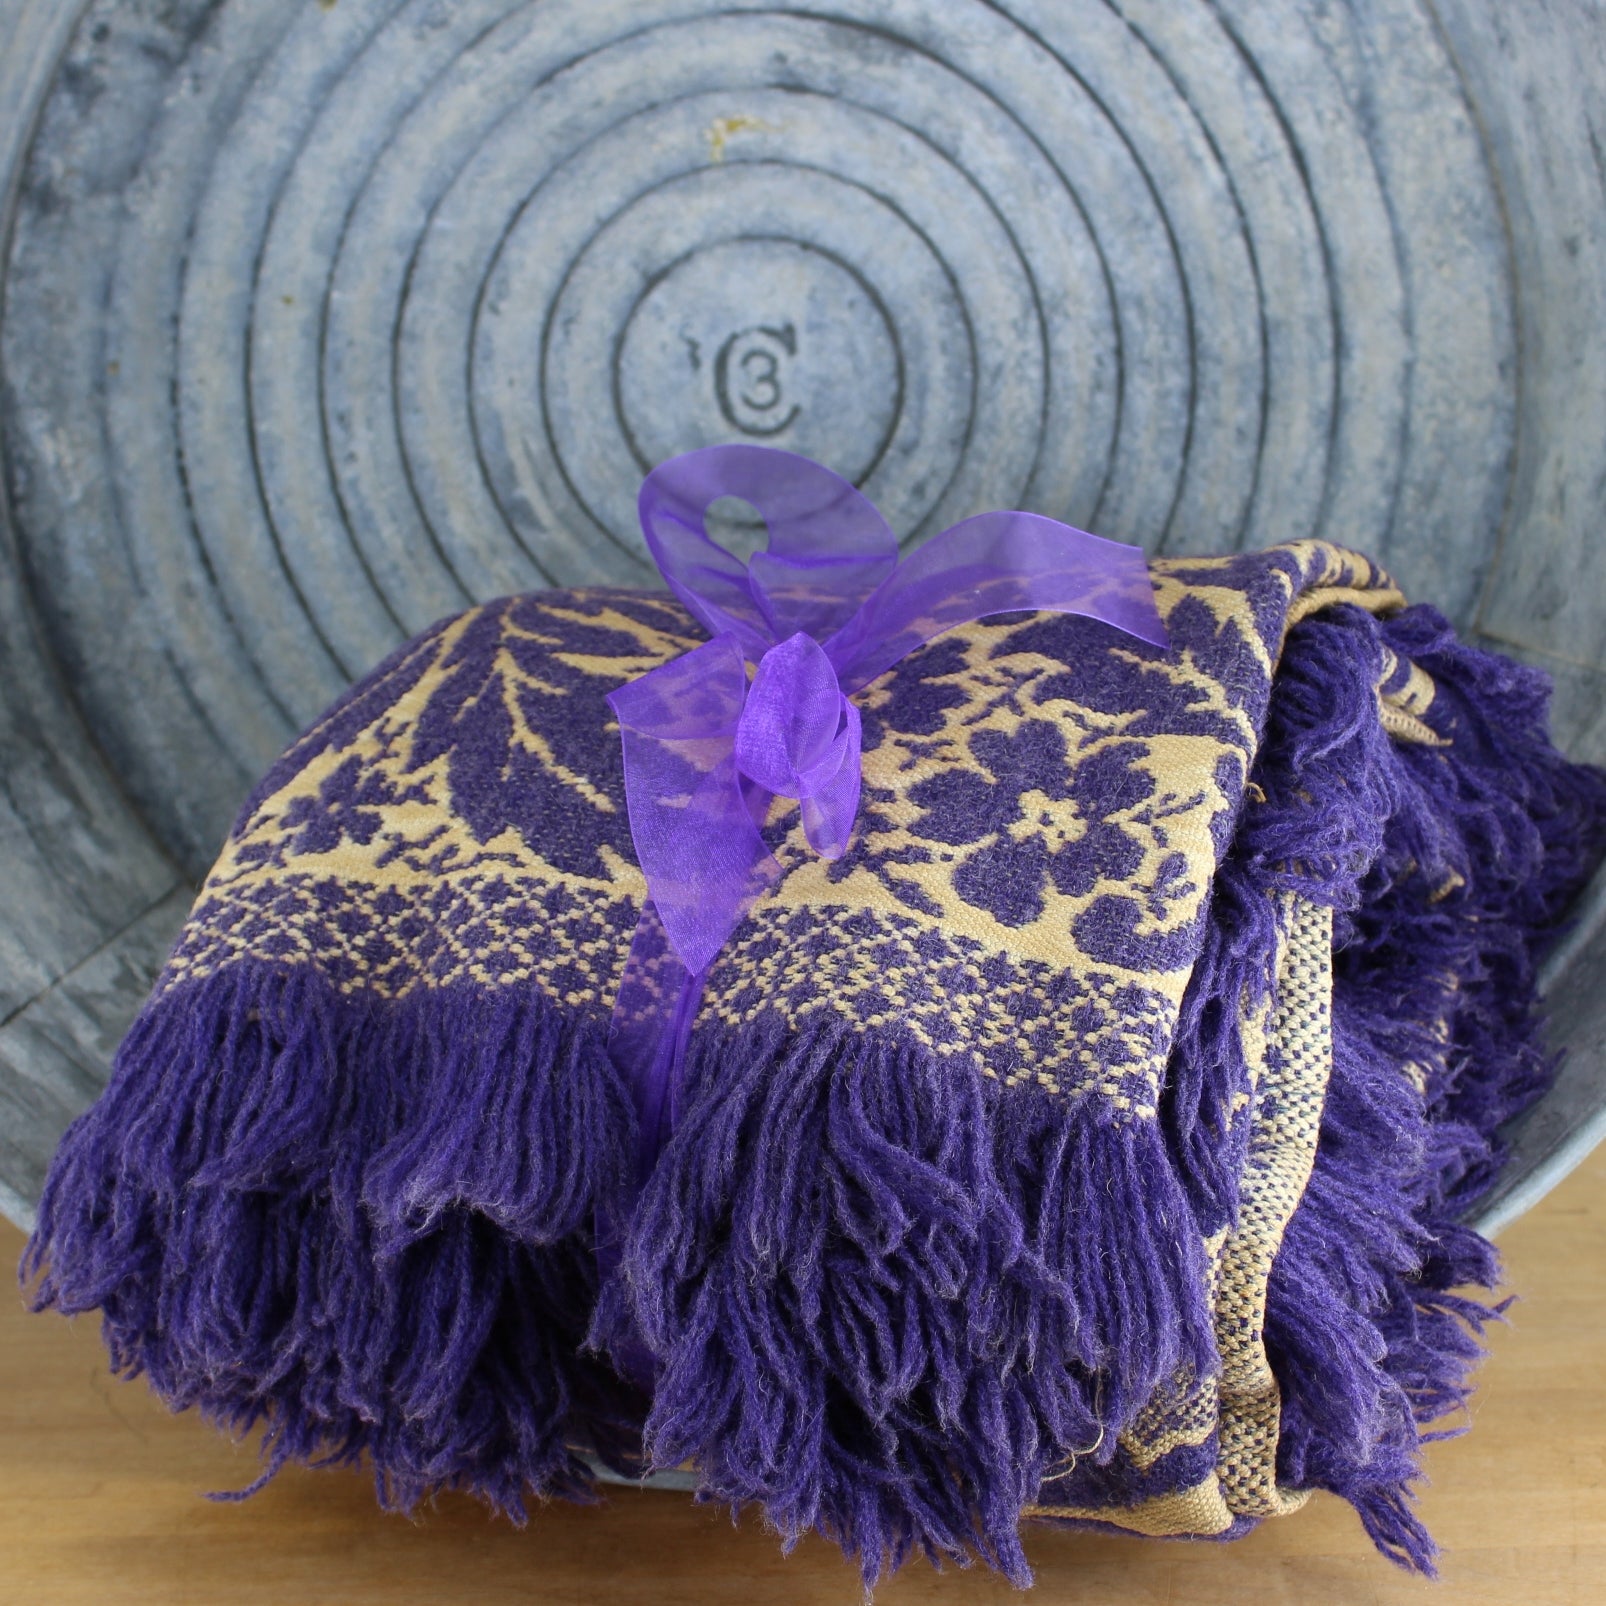 Antique Jacquard Coverlet - Indigo Purple Floral Medallion Geometric - Initials A E - Intricate All Over Design